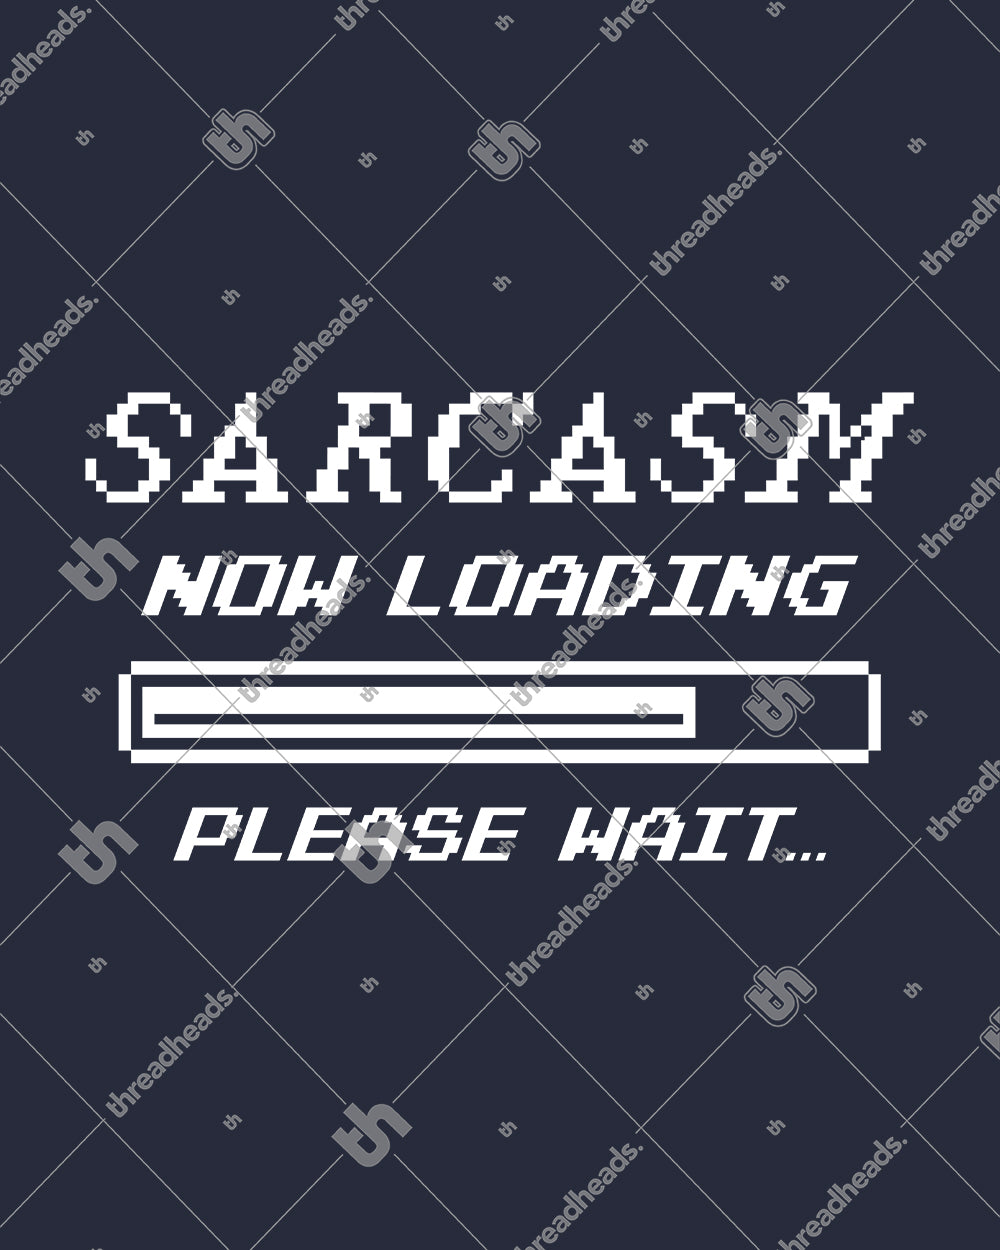 Sarcasm Loading Kids T-Shirt Australia Online #colour_navy